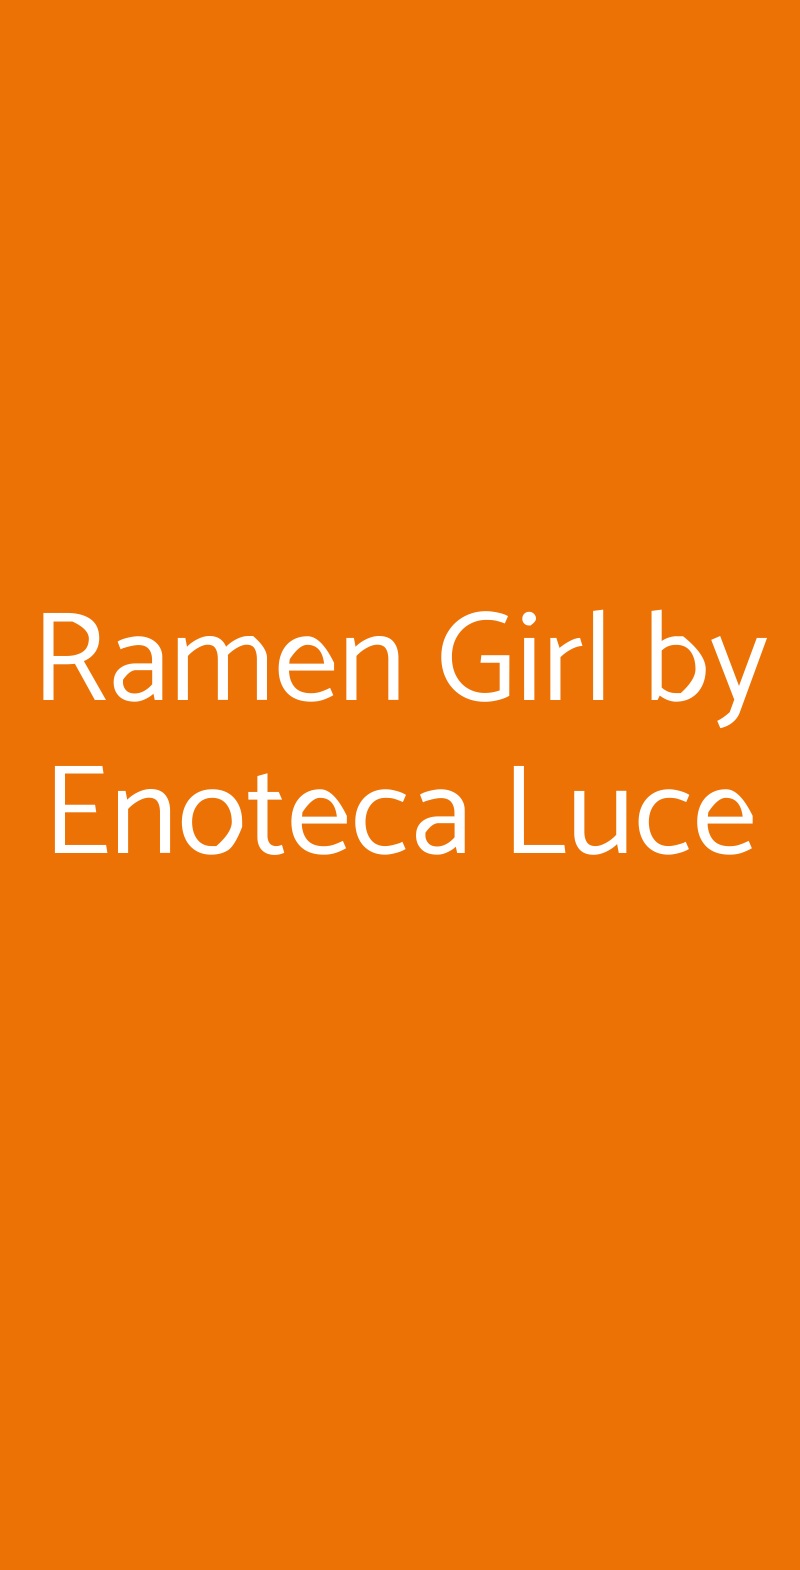 Ramen Girl by Enoteca Luca Firenze menù 1 pagina